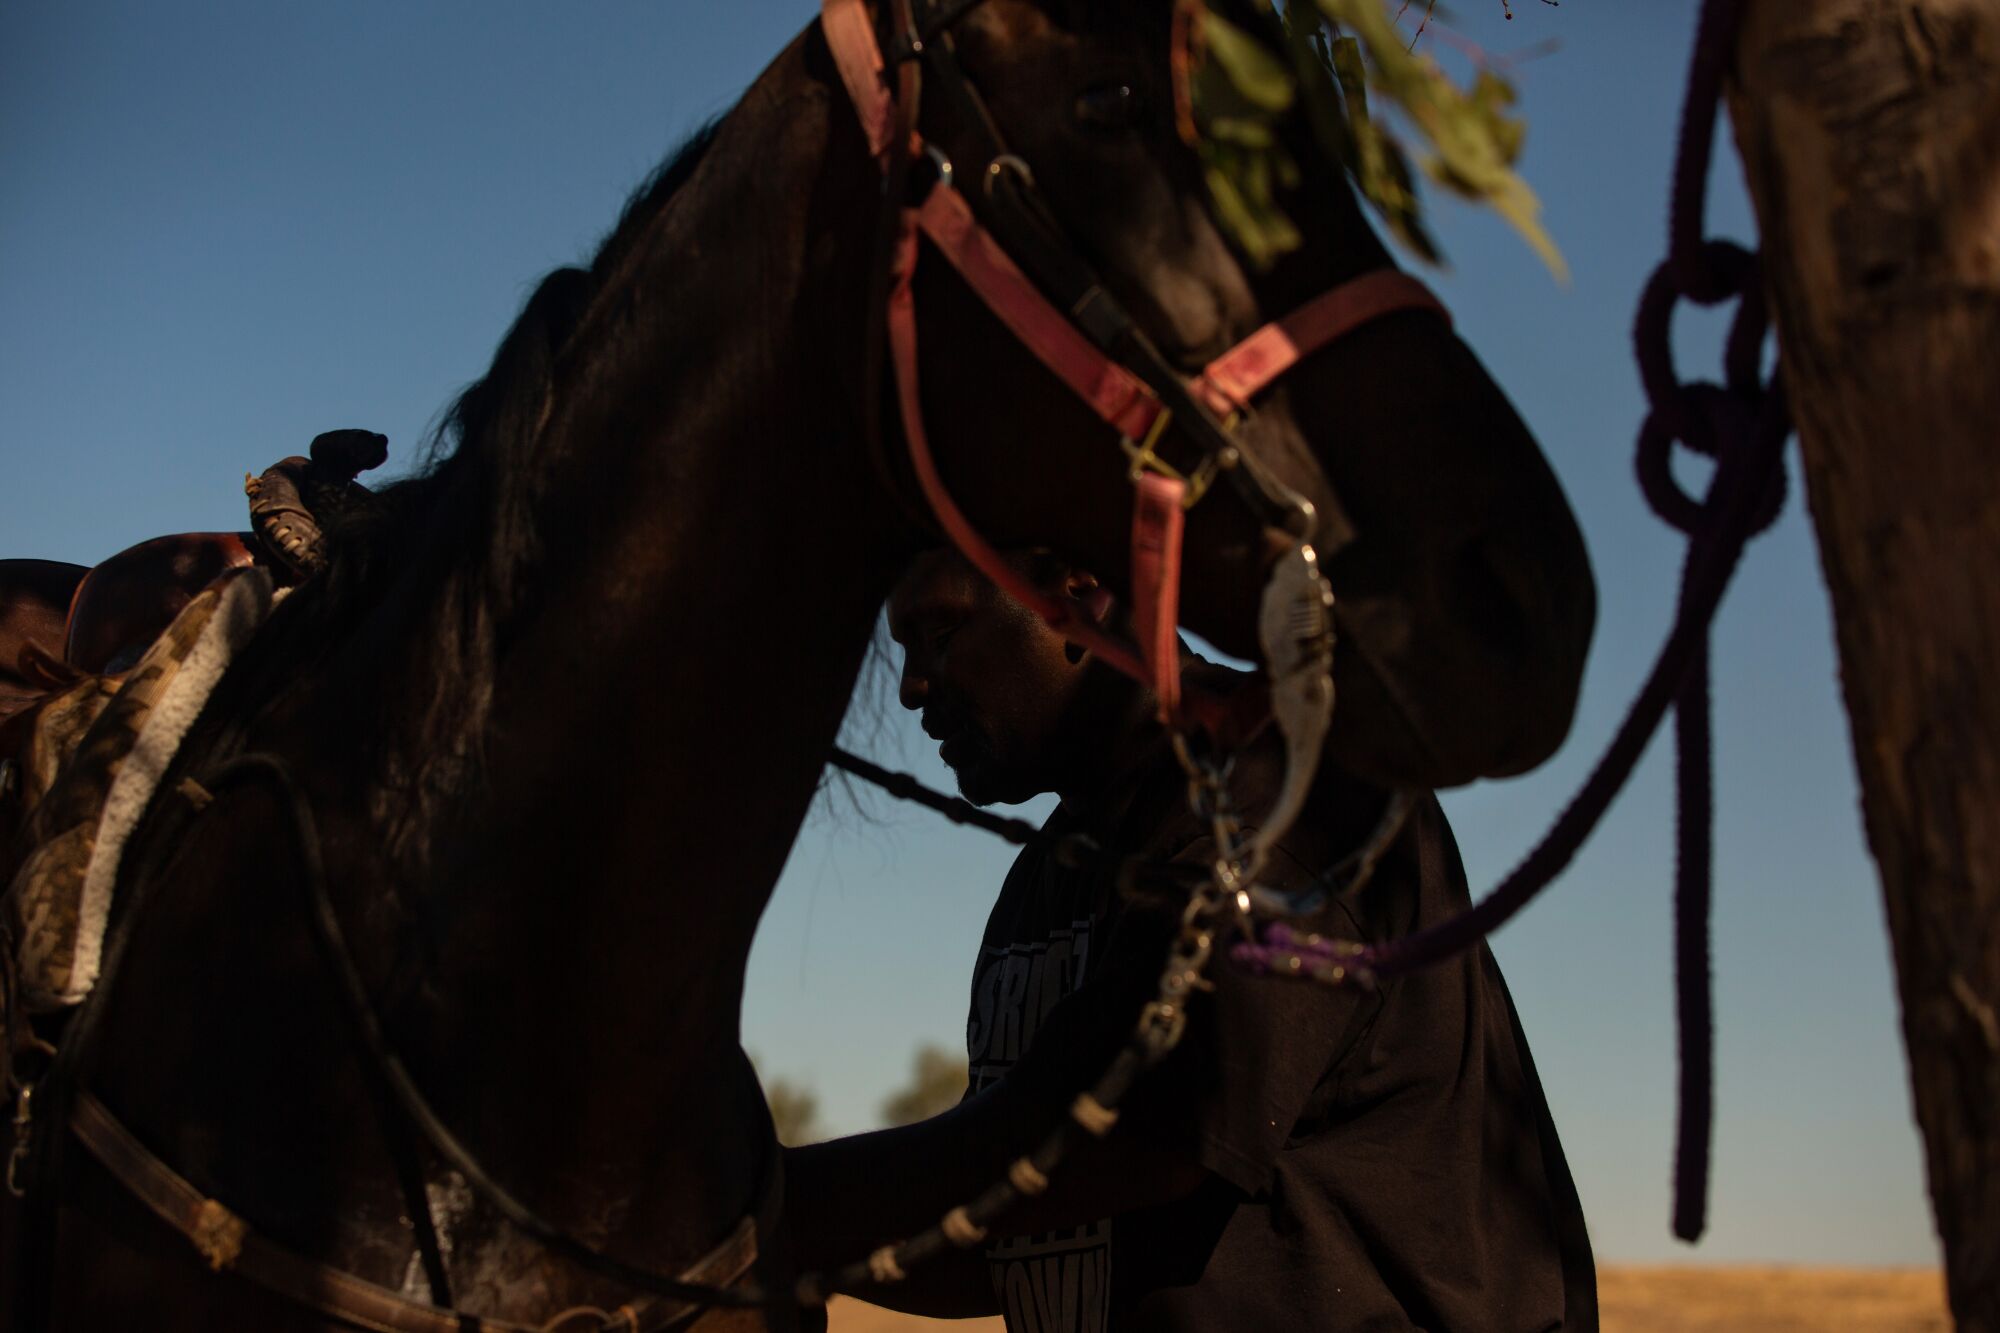 A close shot of a man preparing a horse for a ride